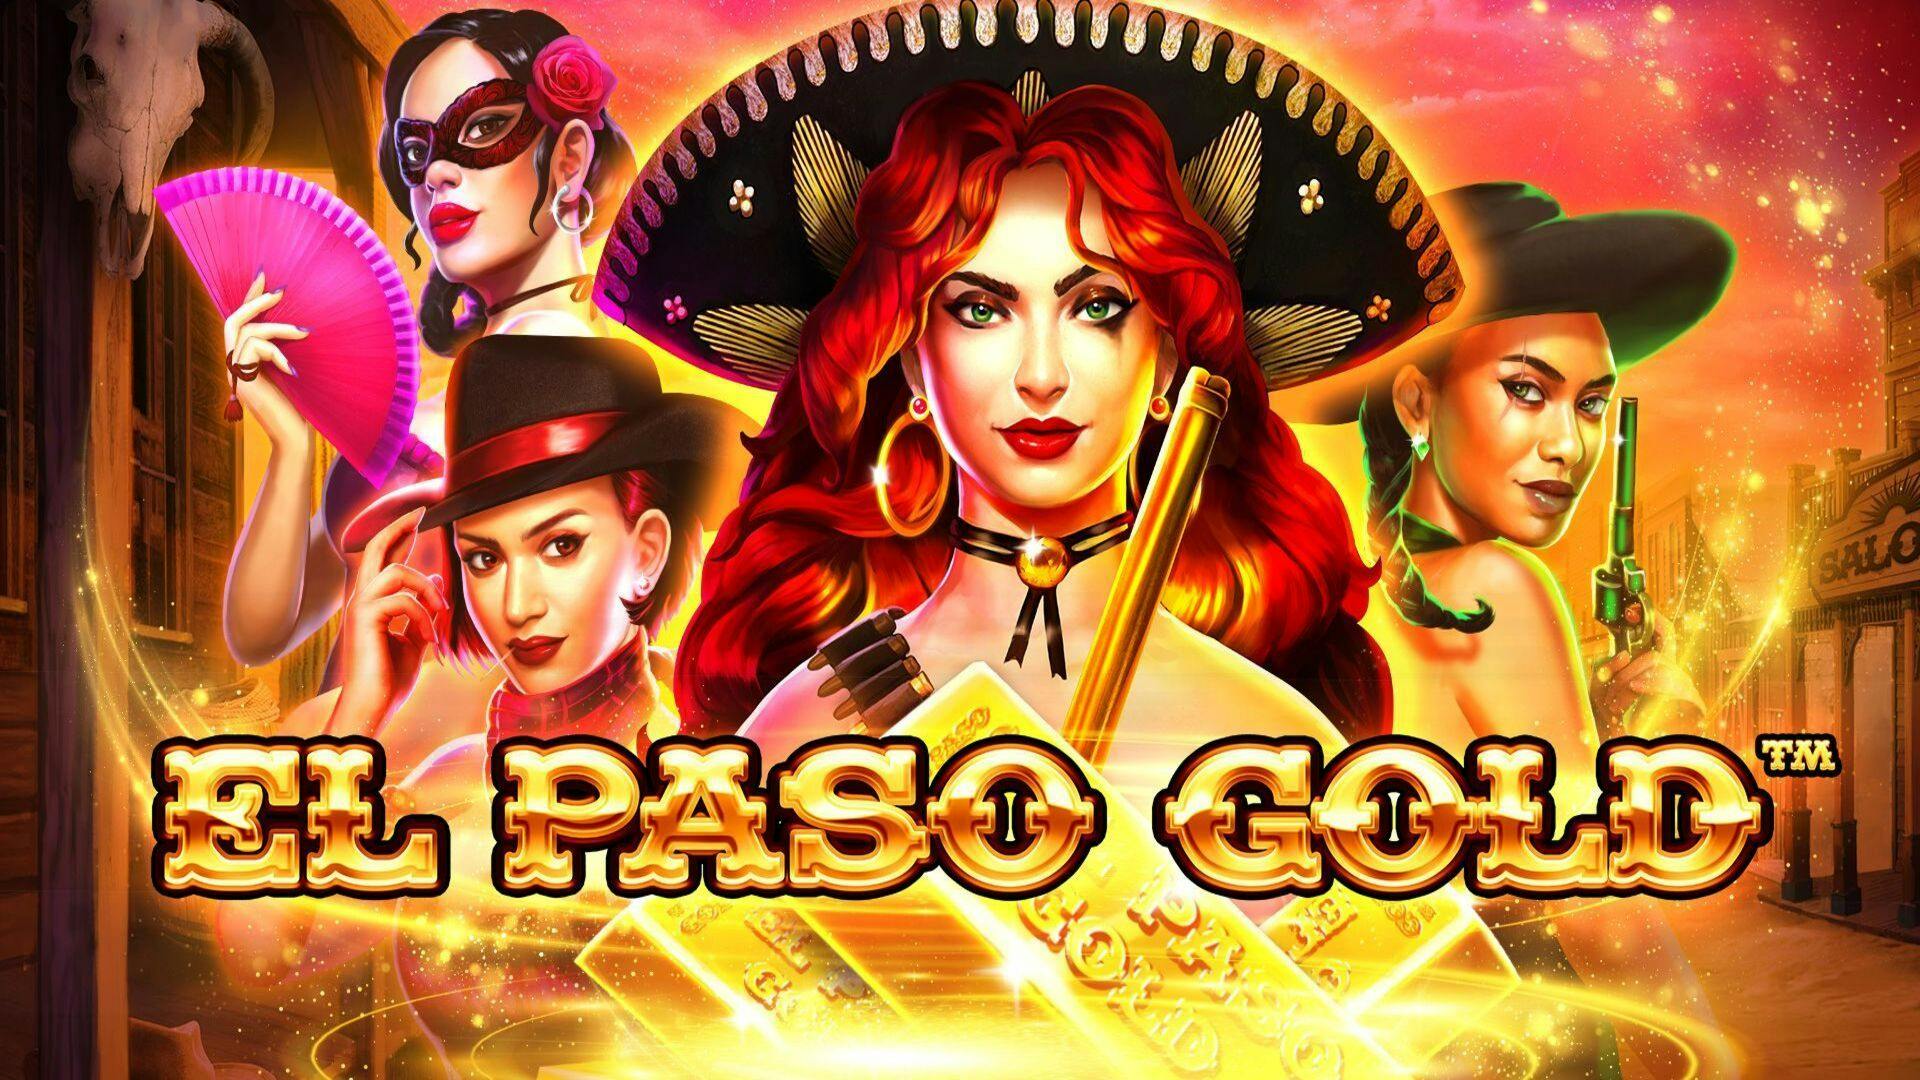 Slot Machine El Paso Gold Free Game Play